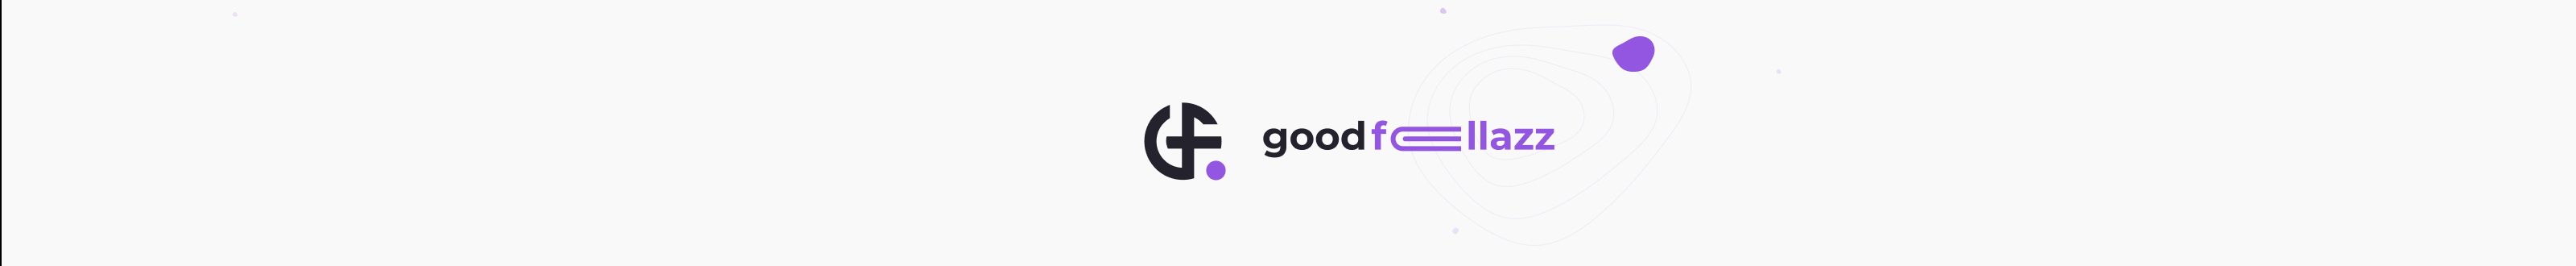 Goodfellazz LLC's profile banner